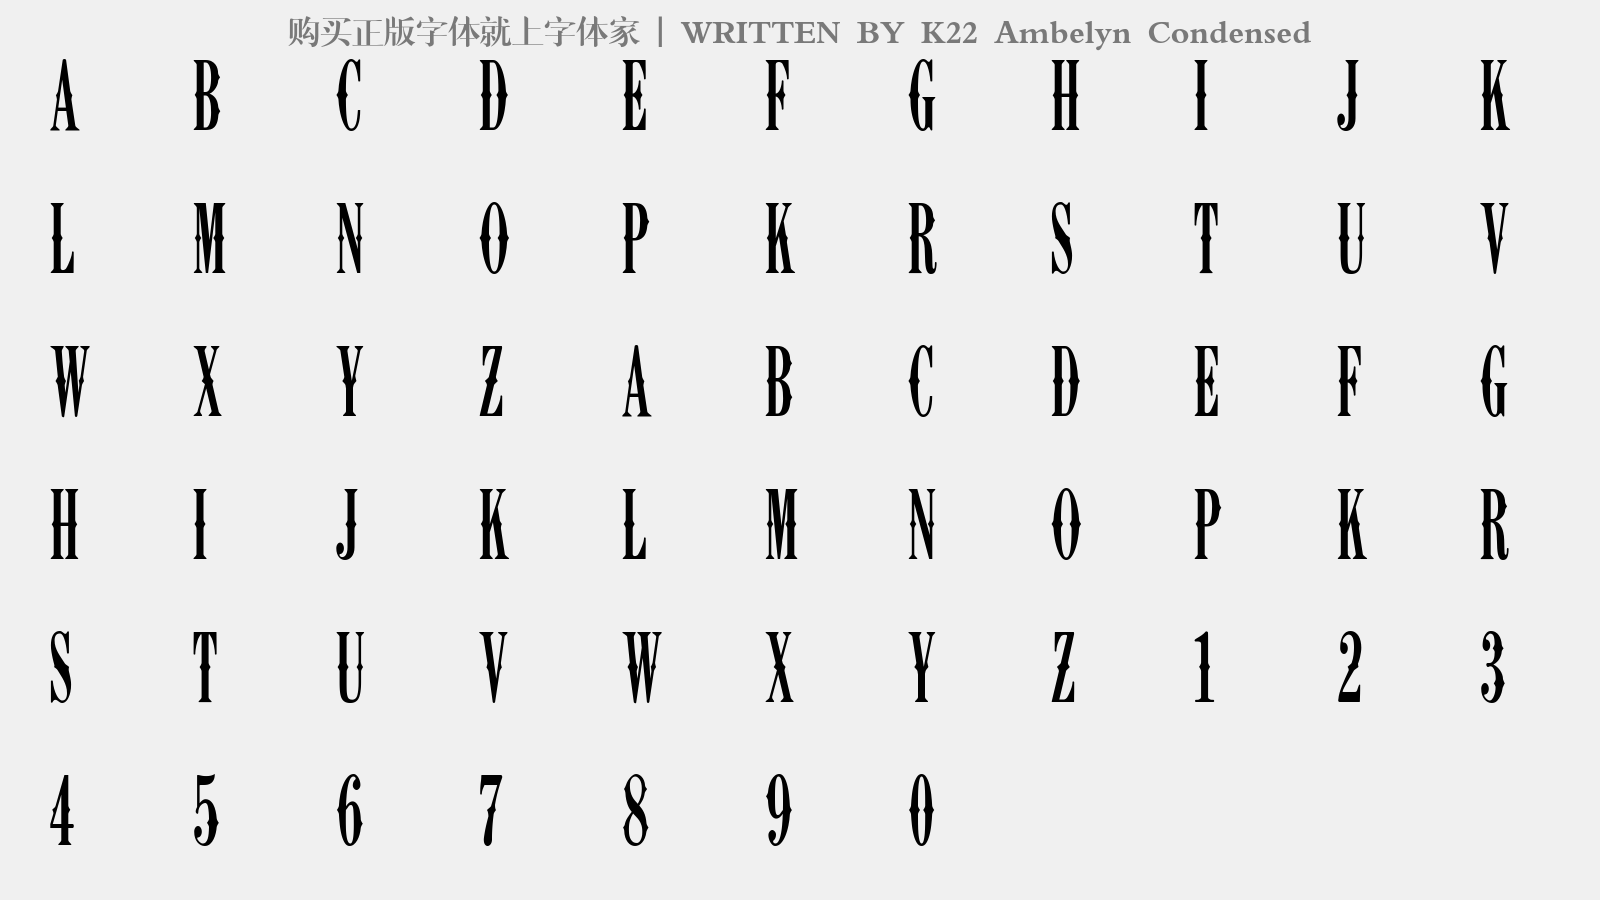 K22 Ambelyn Condensed - 大写字母/小写字母/数字